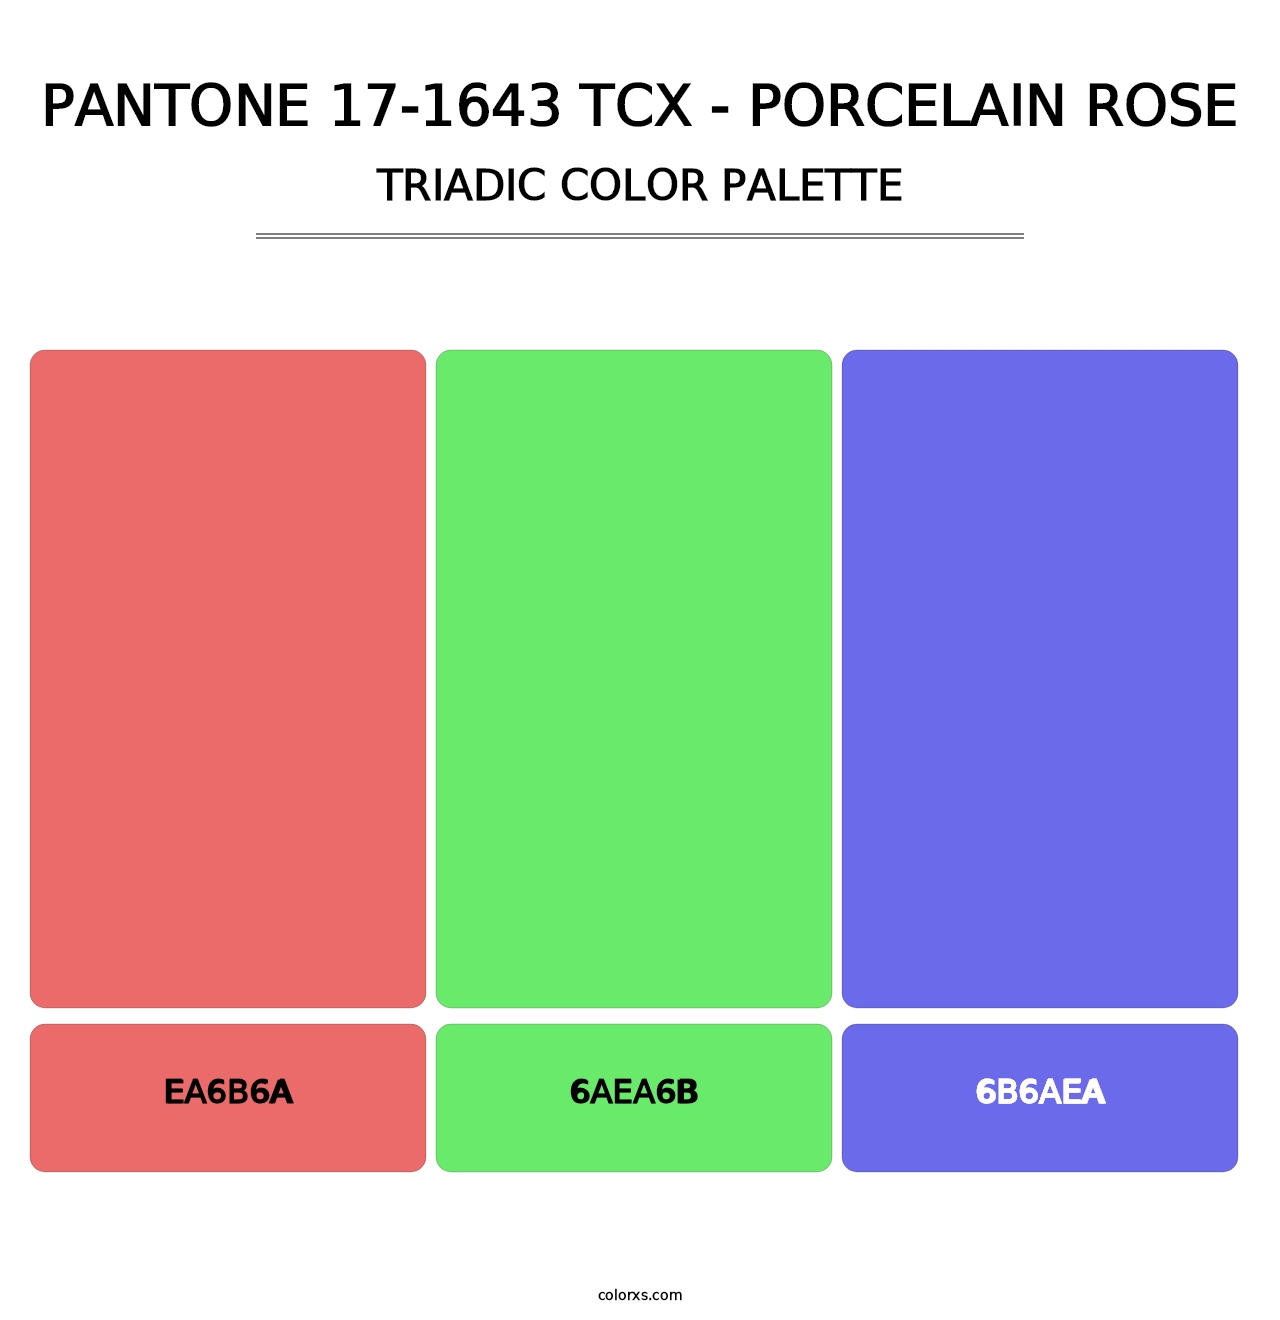 PANTONE 17-1643 TCX - Porcelain Rose - Triadic Color Palette